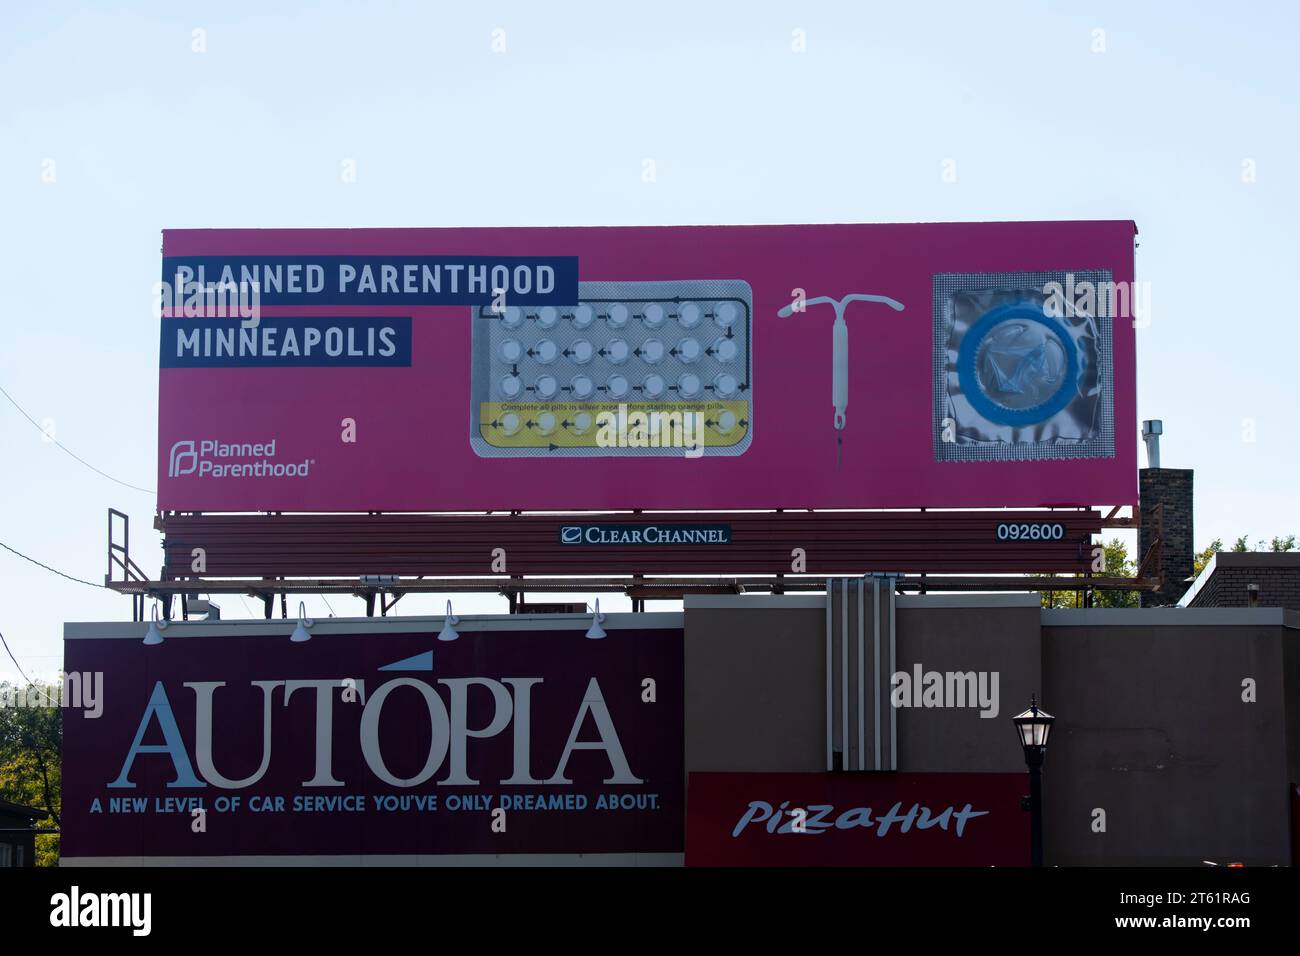 Minneapolis, Minnesota. Planned Parenthood billboard. Stock Photo